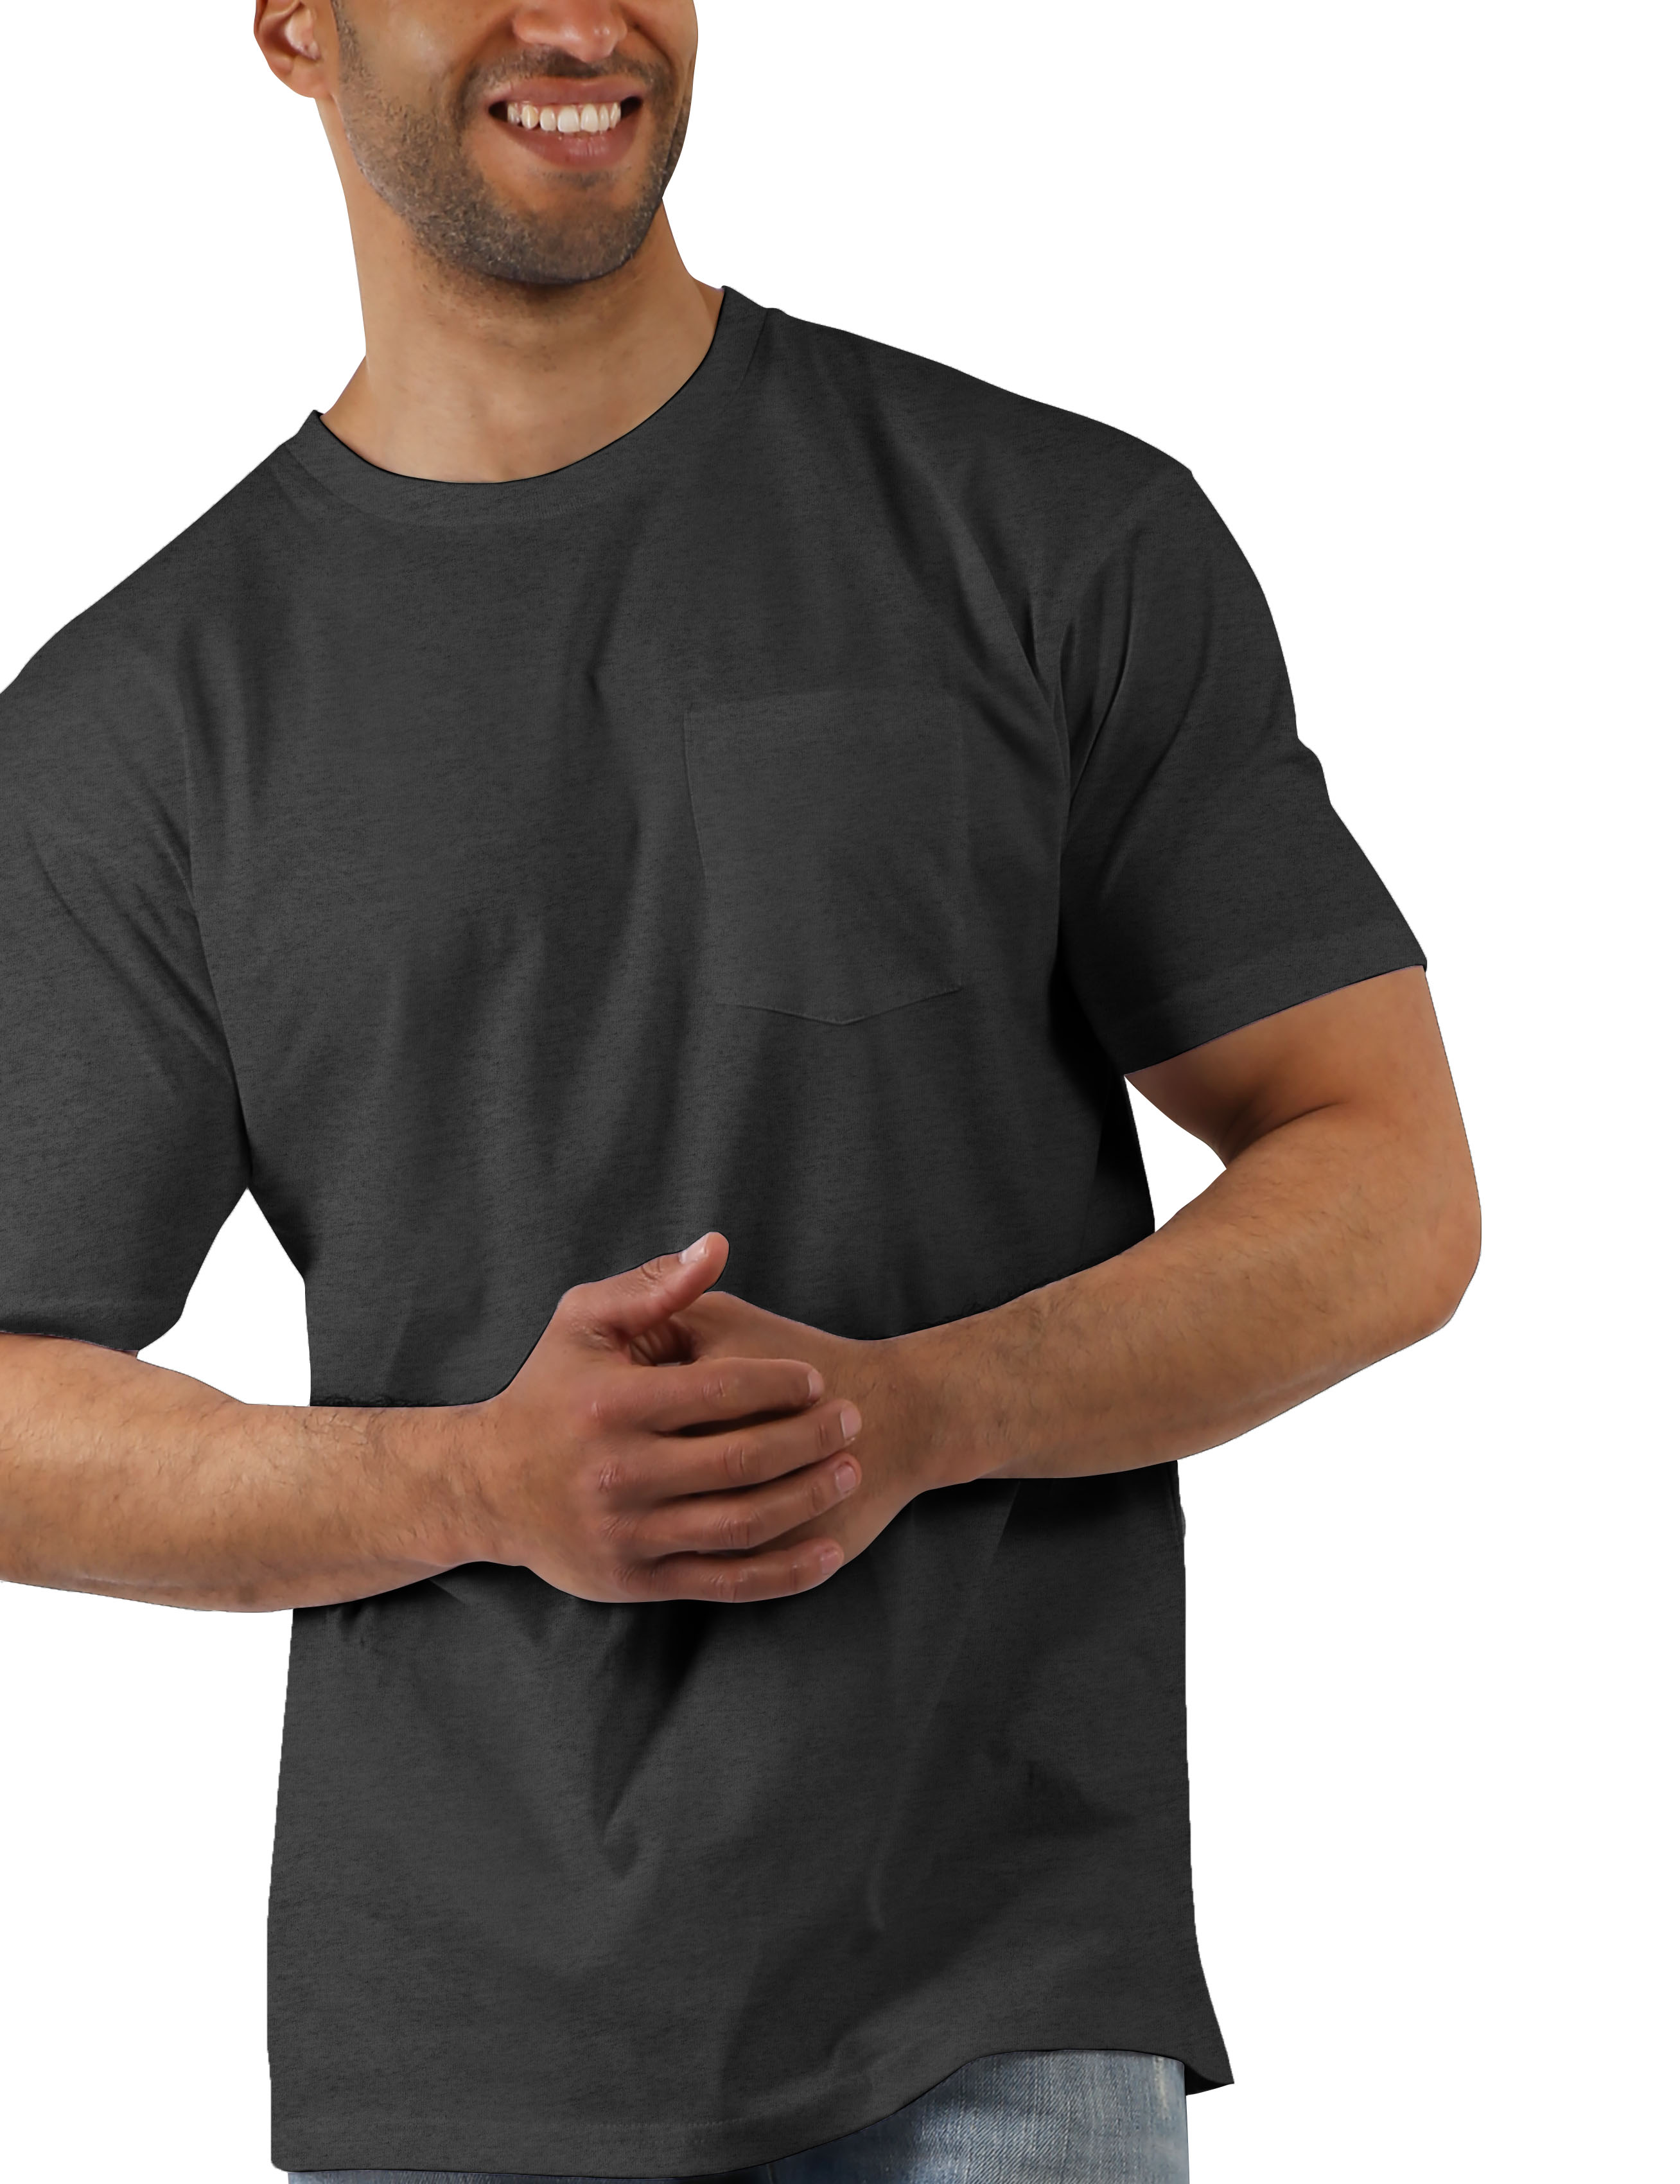 Ma Croix Mens Premium Pocket Tee Lightweight Cotton Workwear Crewneck Short Sleeve T Shirt - image 5 of 6